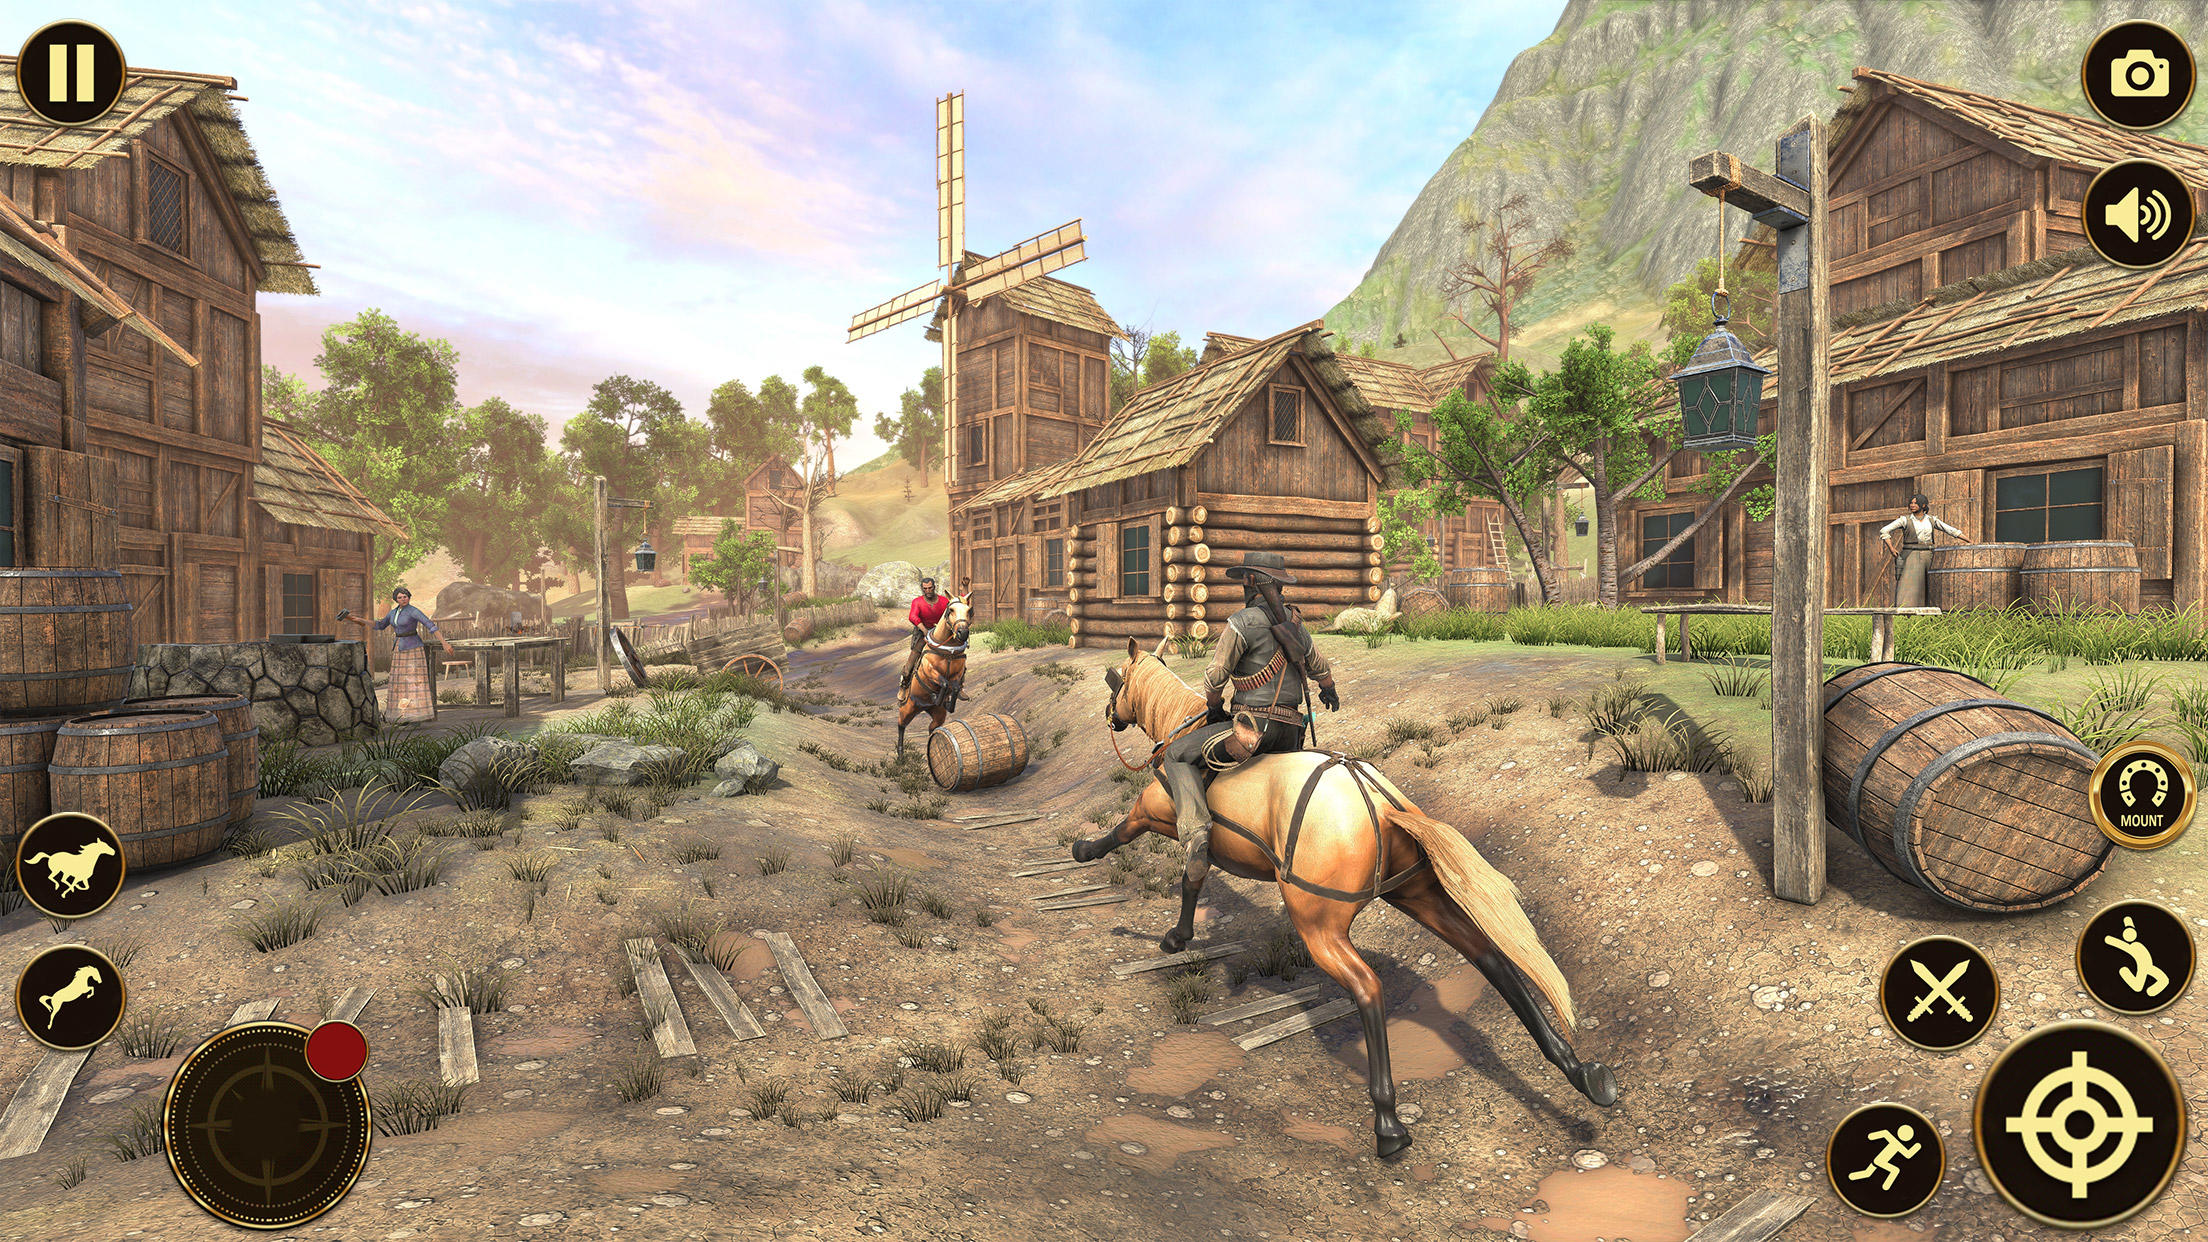 Screenshot 1 of Permainan Koboi Wild West Luar Talian 1.0.5